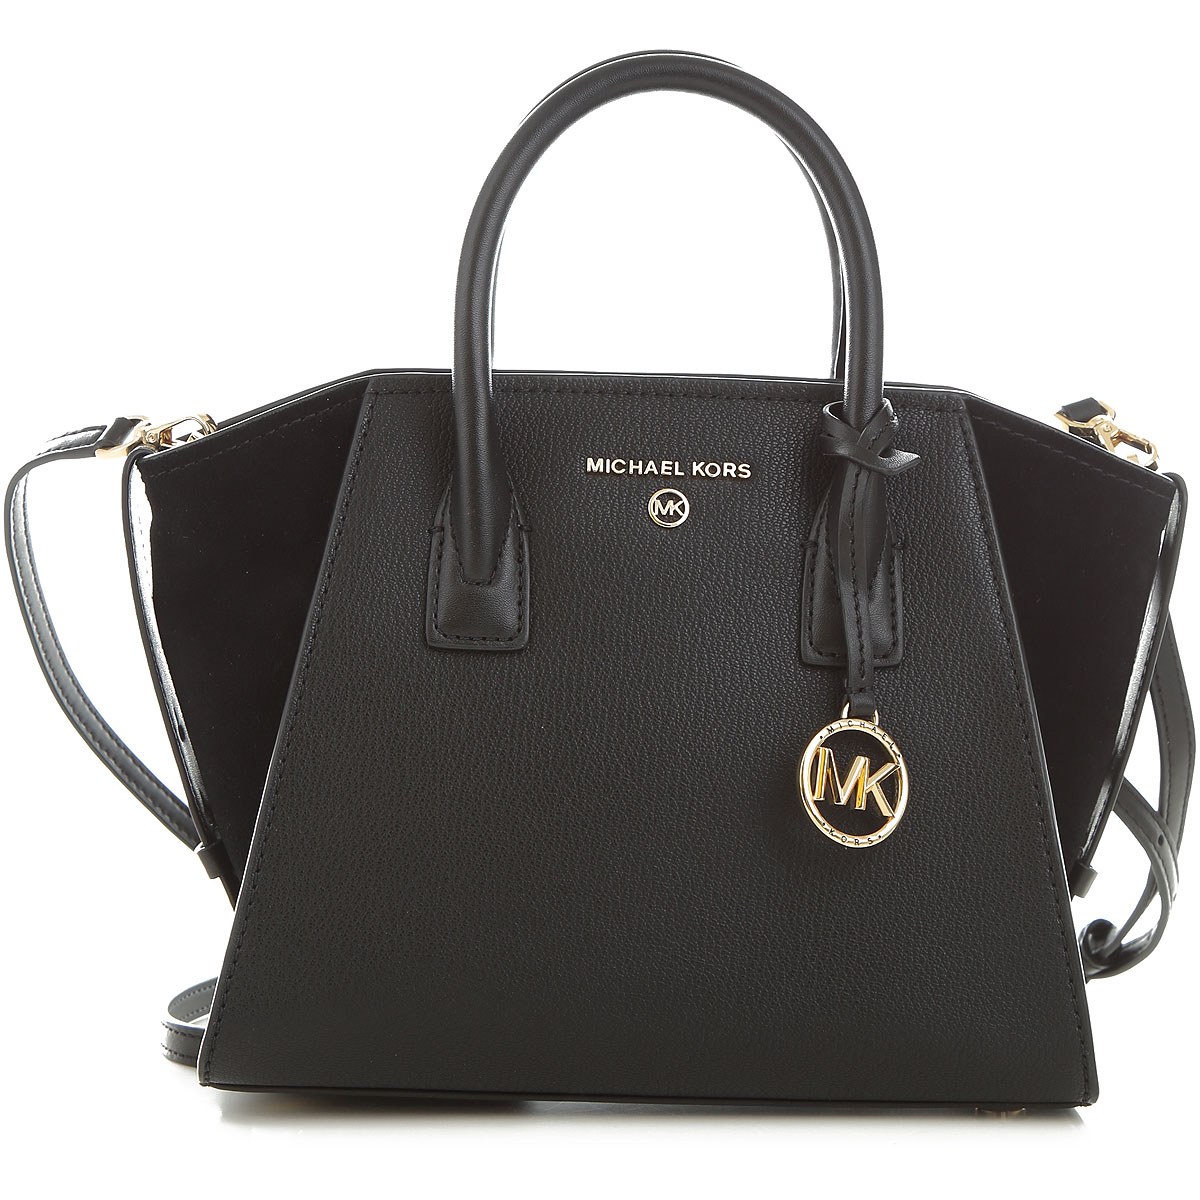 Handbags Michael Kors, Style code: 30f2g4vs1l-001-